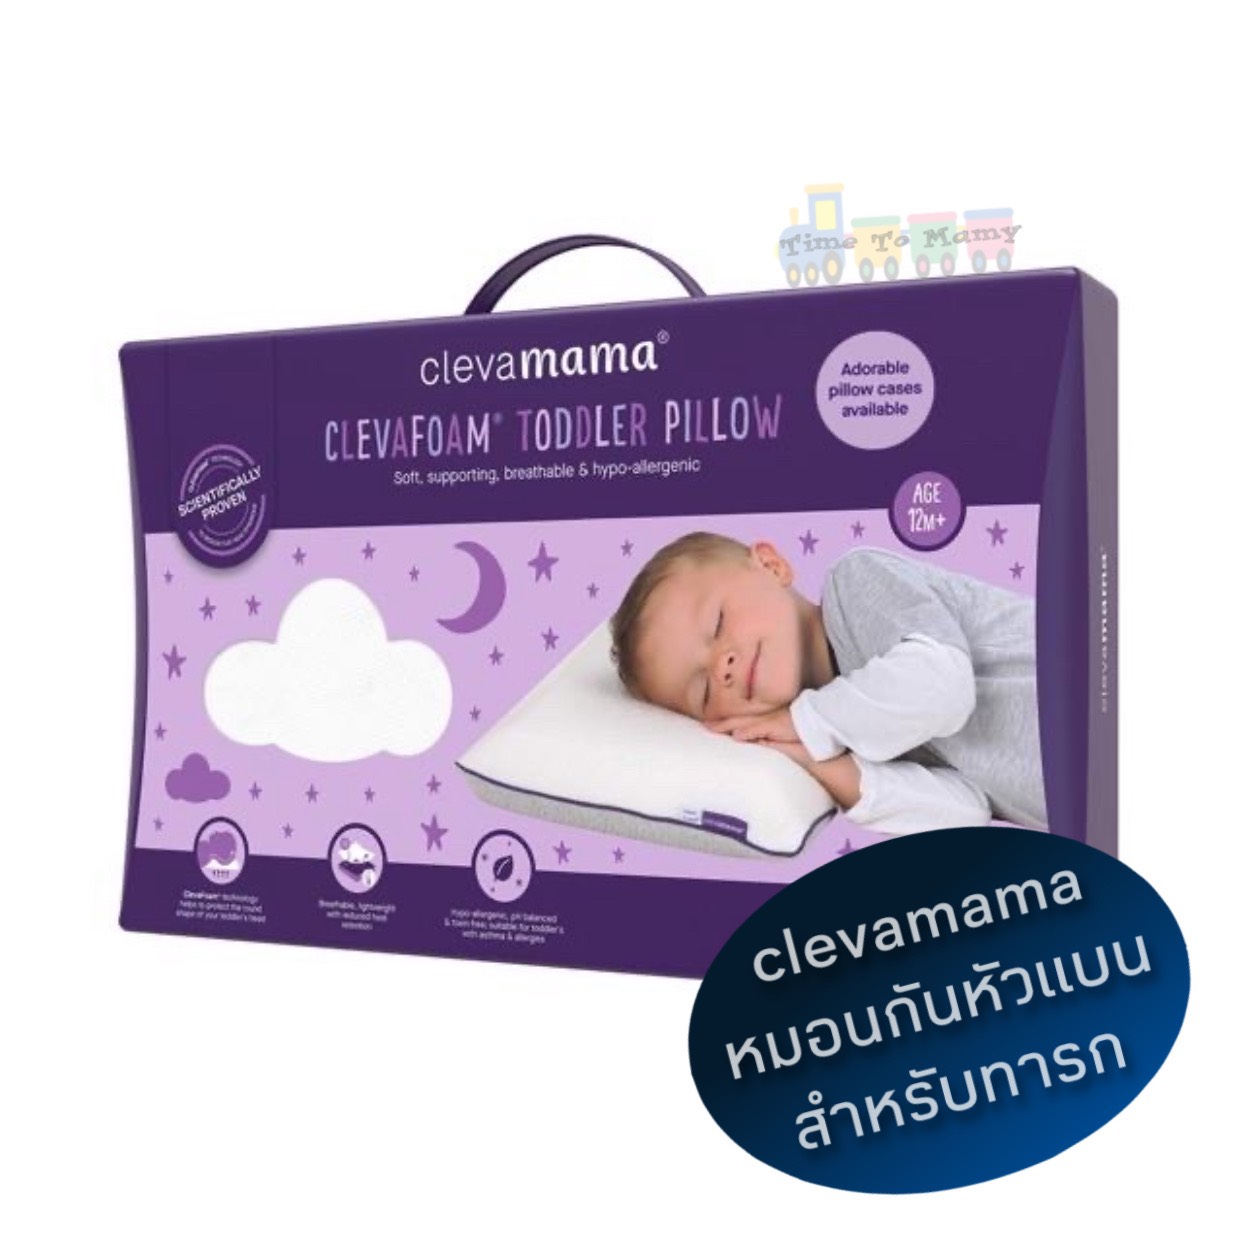 Clevamama หมอนหัวทุย หมอนกันหัวแบน หมอนเด็กทารก รุ่นToddler Pillow(12เดือน++)ขนาด50x30x5.5cm. หมอนนิ่มมากลูกหลับยาวสบาย [ของแท้100%]